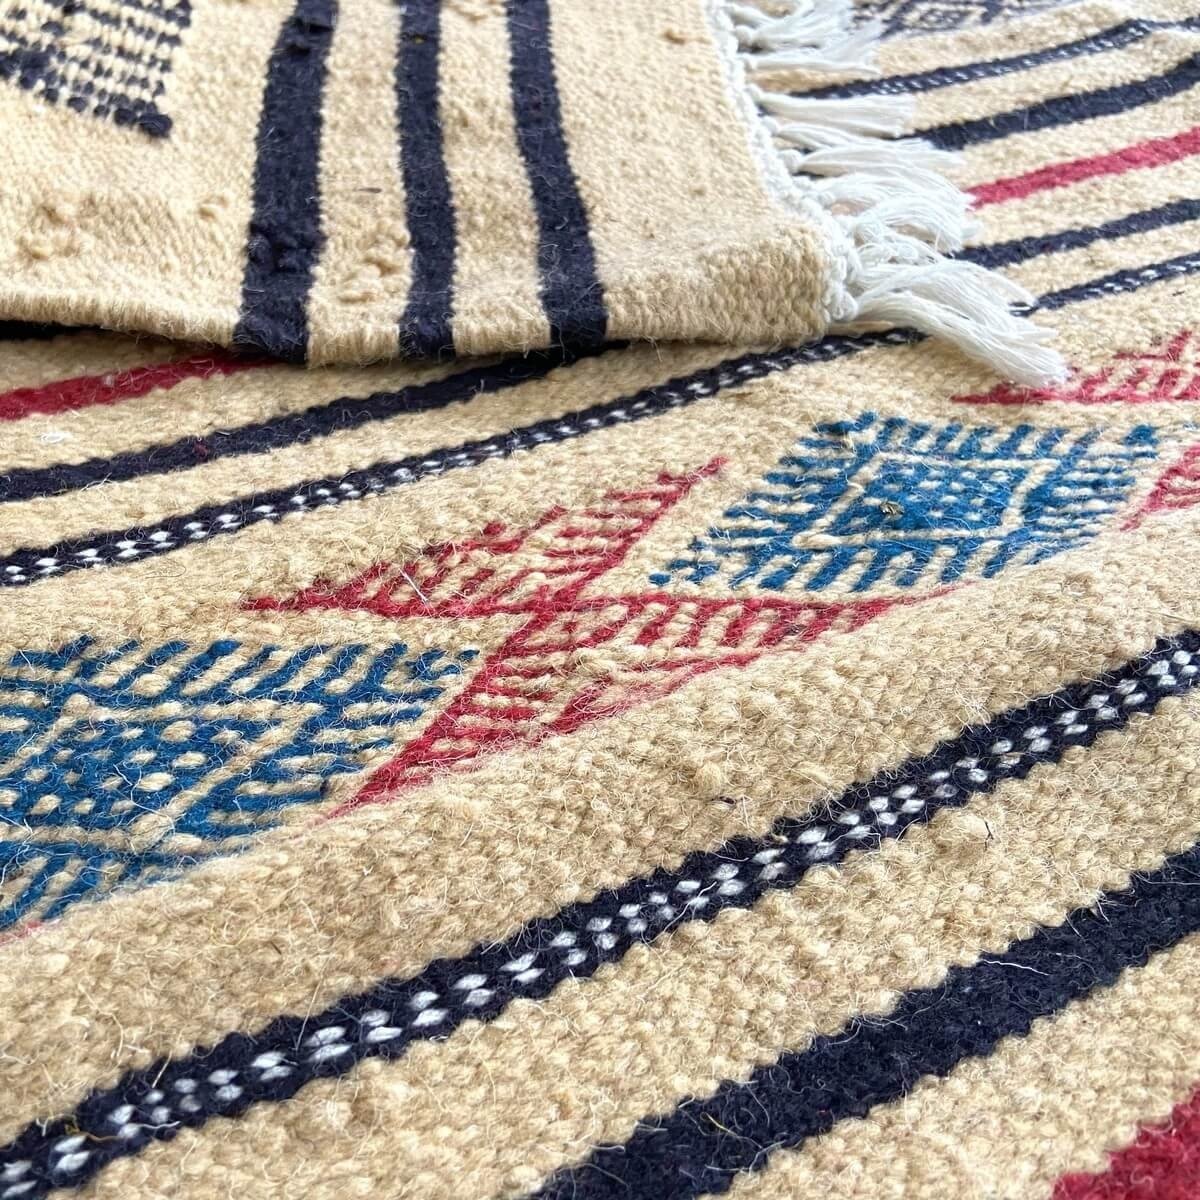 Berber tapijt Tapijt Kilim Saïd 138x237 Beige/Wit (Handgeweven, Wol, Tunesië) Tunesisch kilimdeken, Marokkaanse stijl. Rechthoek